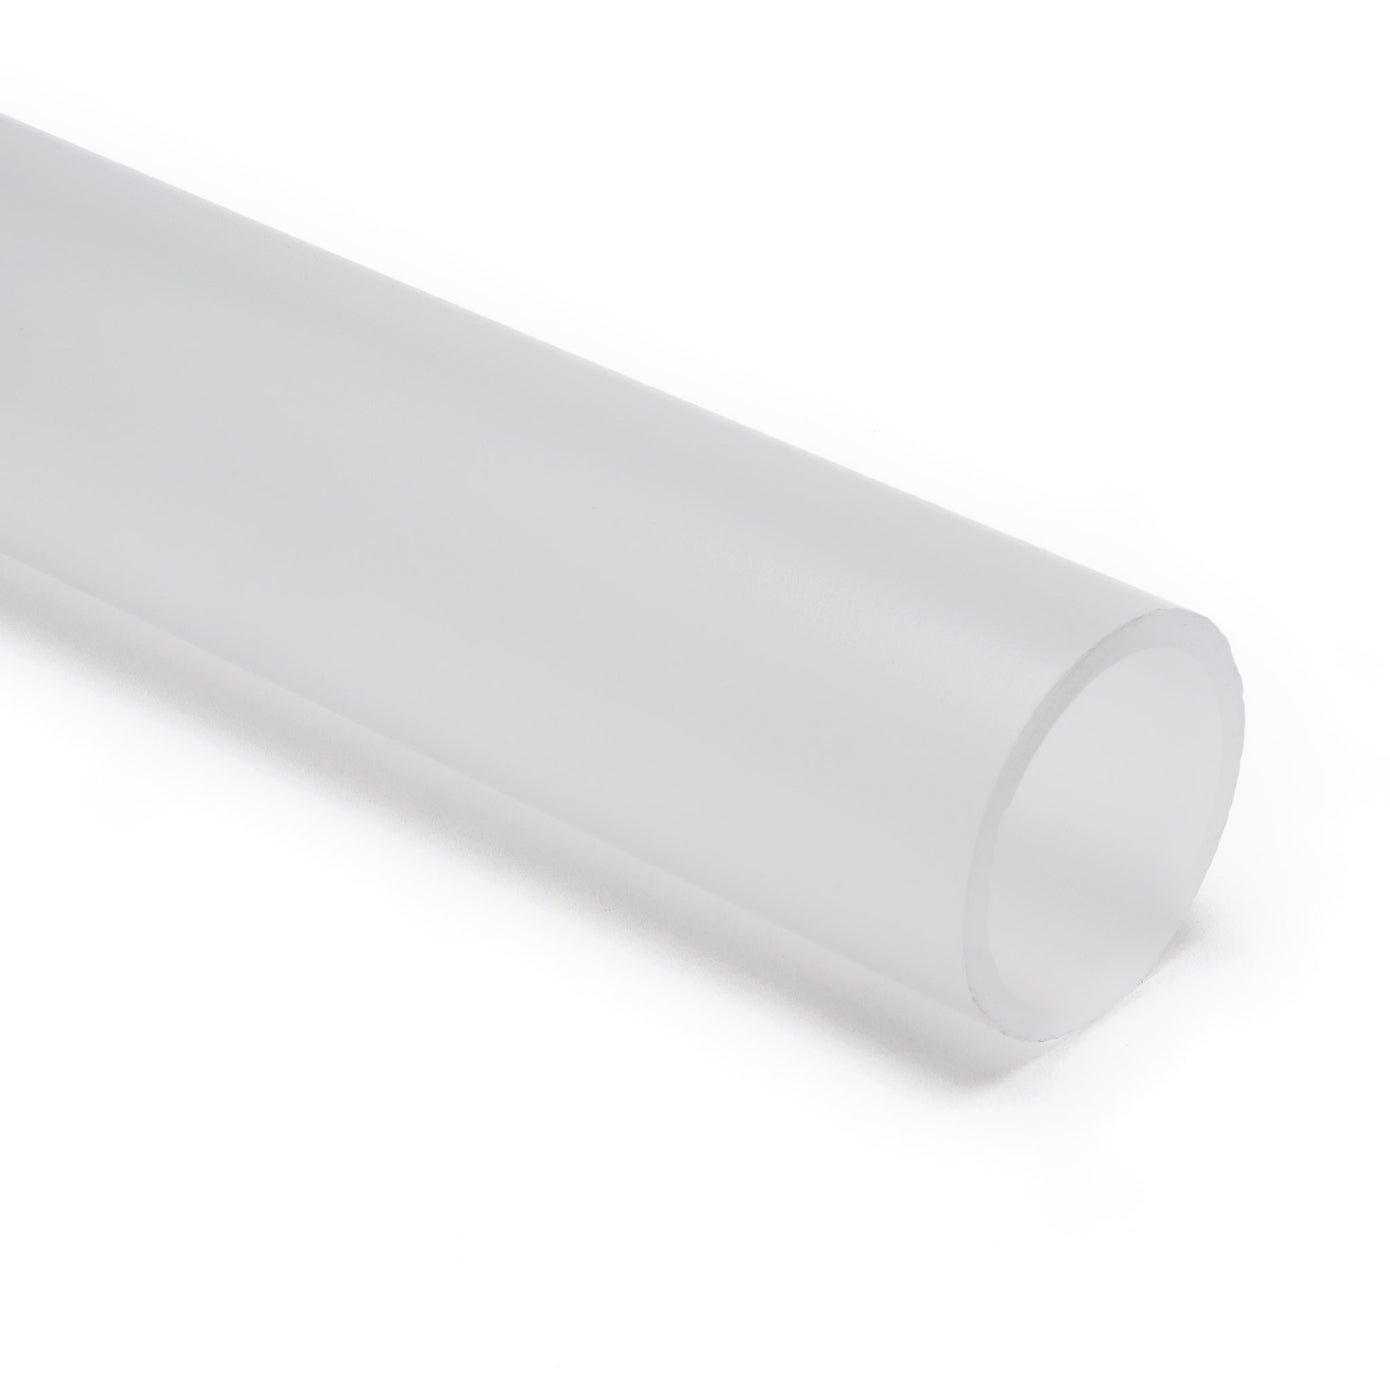 Acrylic Plastic Rod (6' Length)